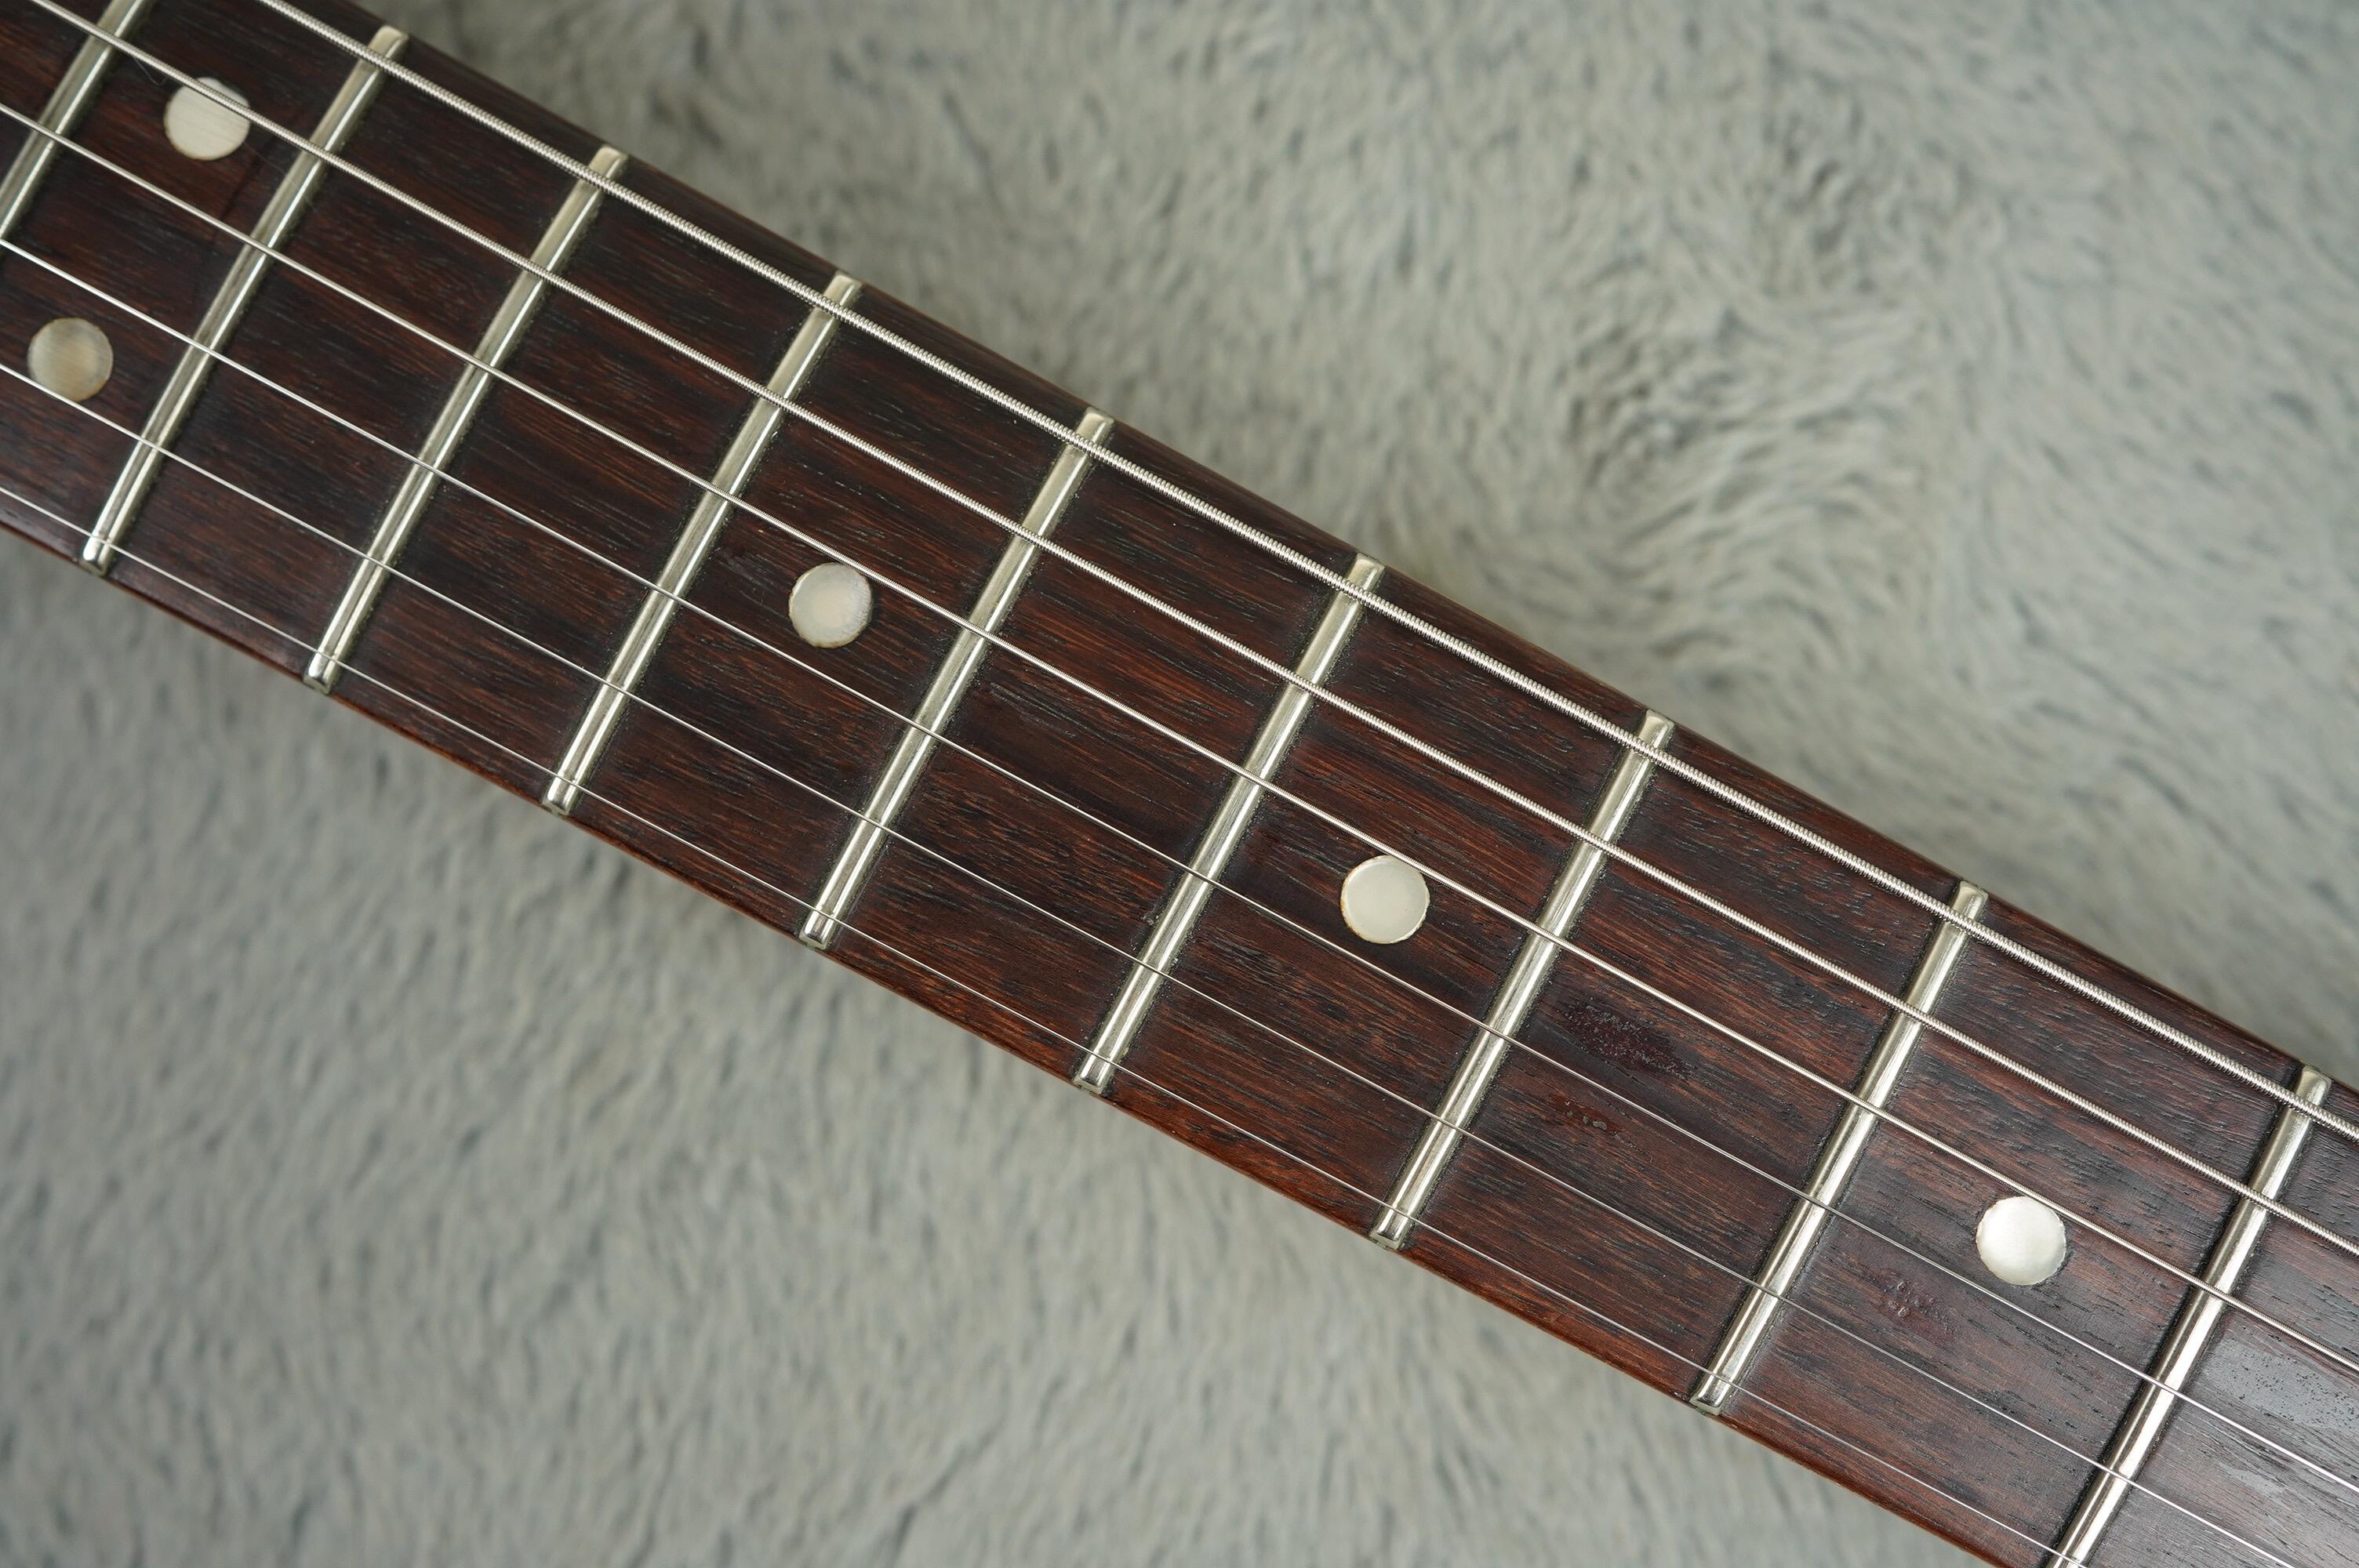 1969 Fender Telecaster refin natural